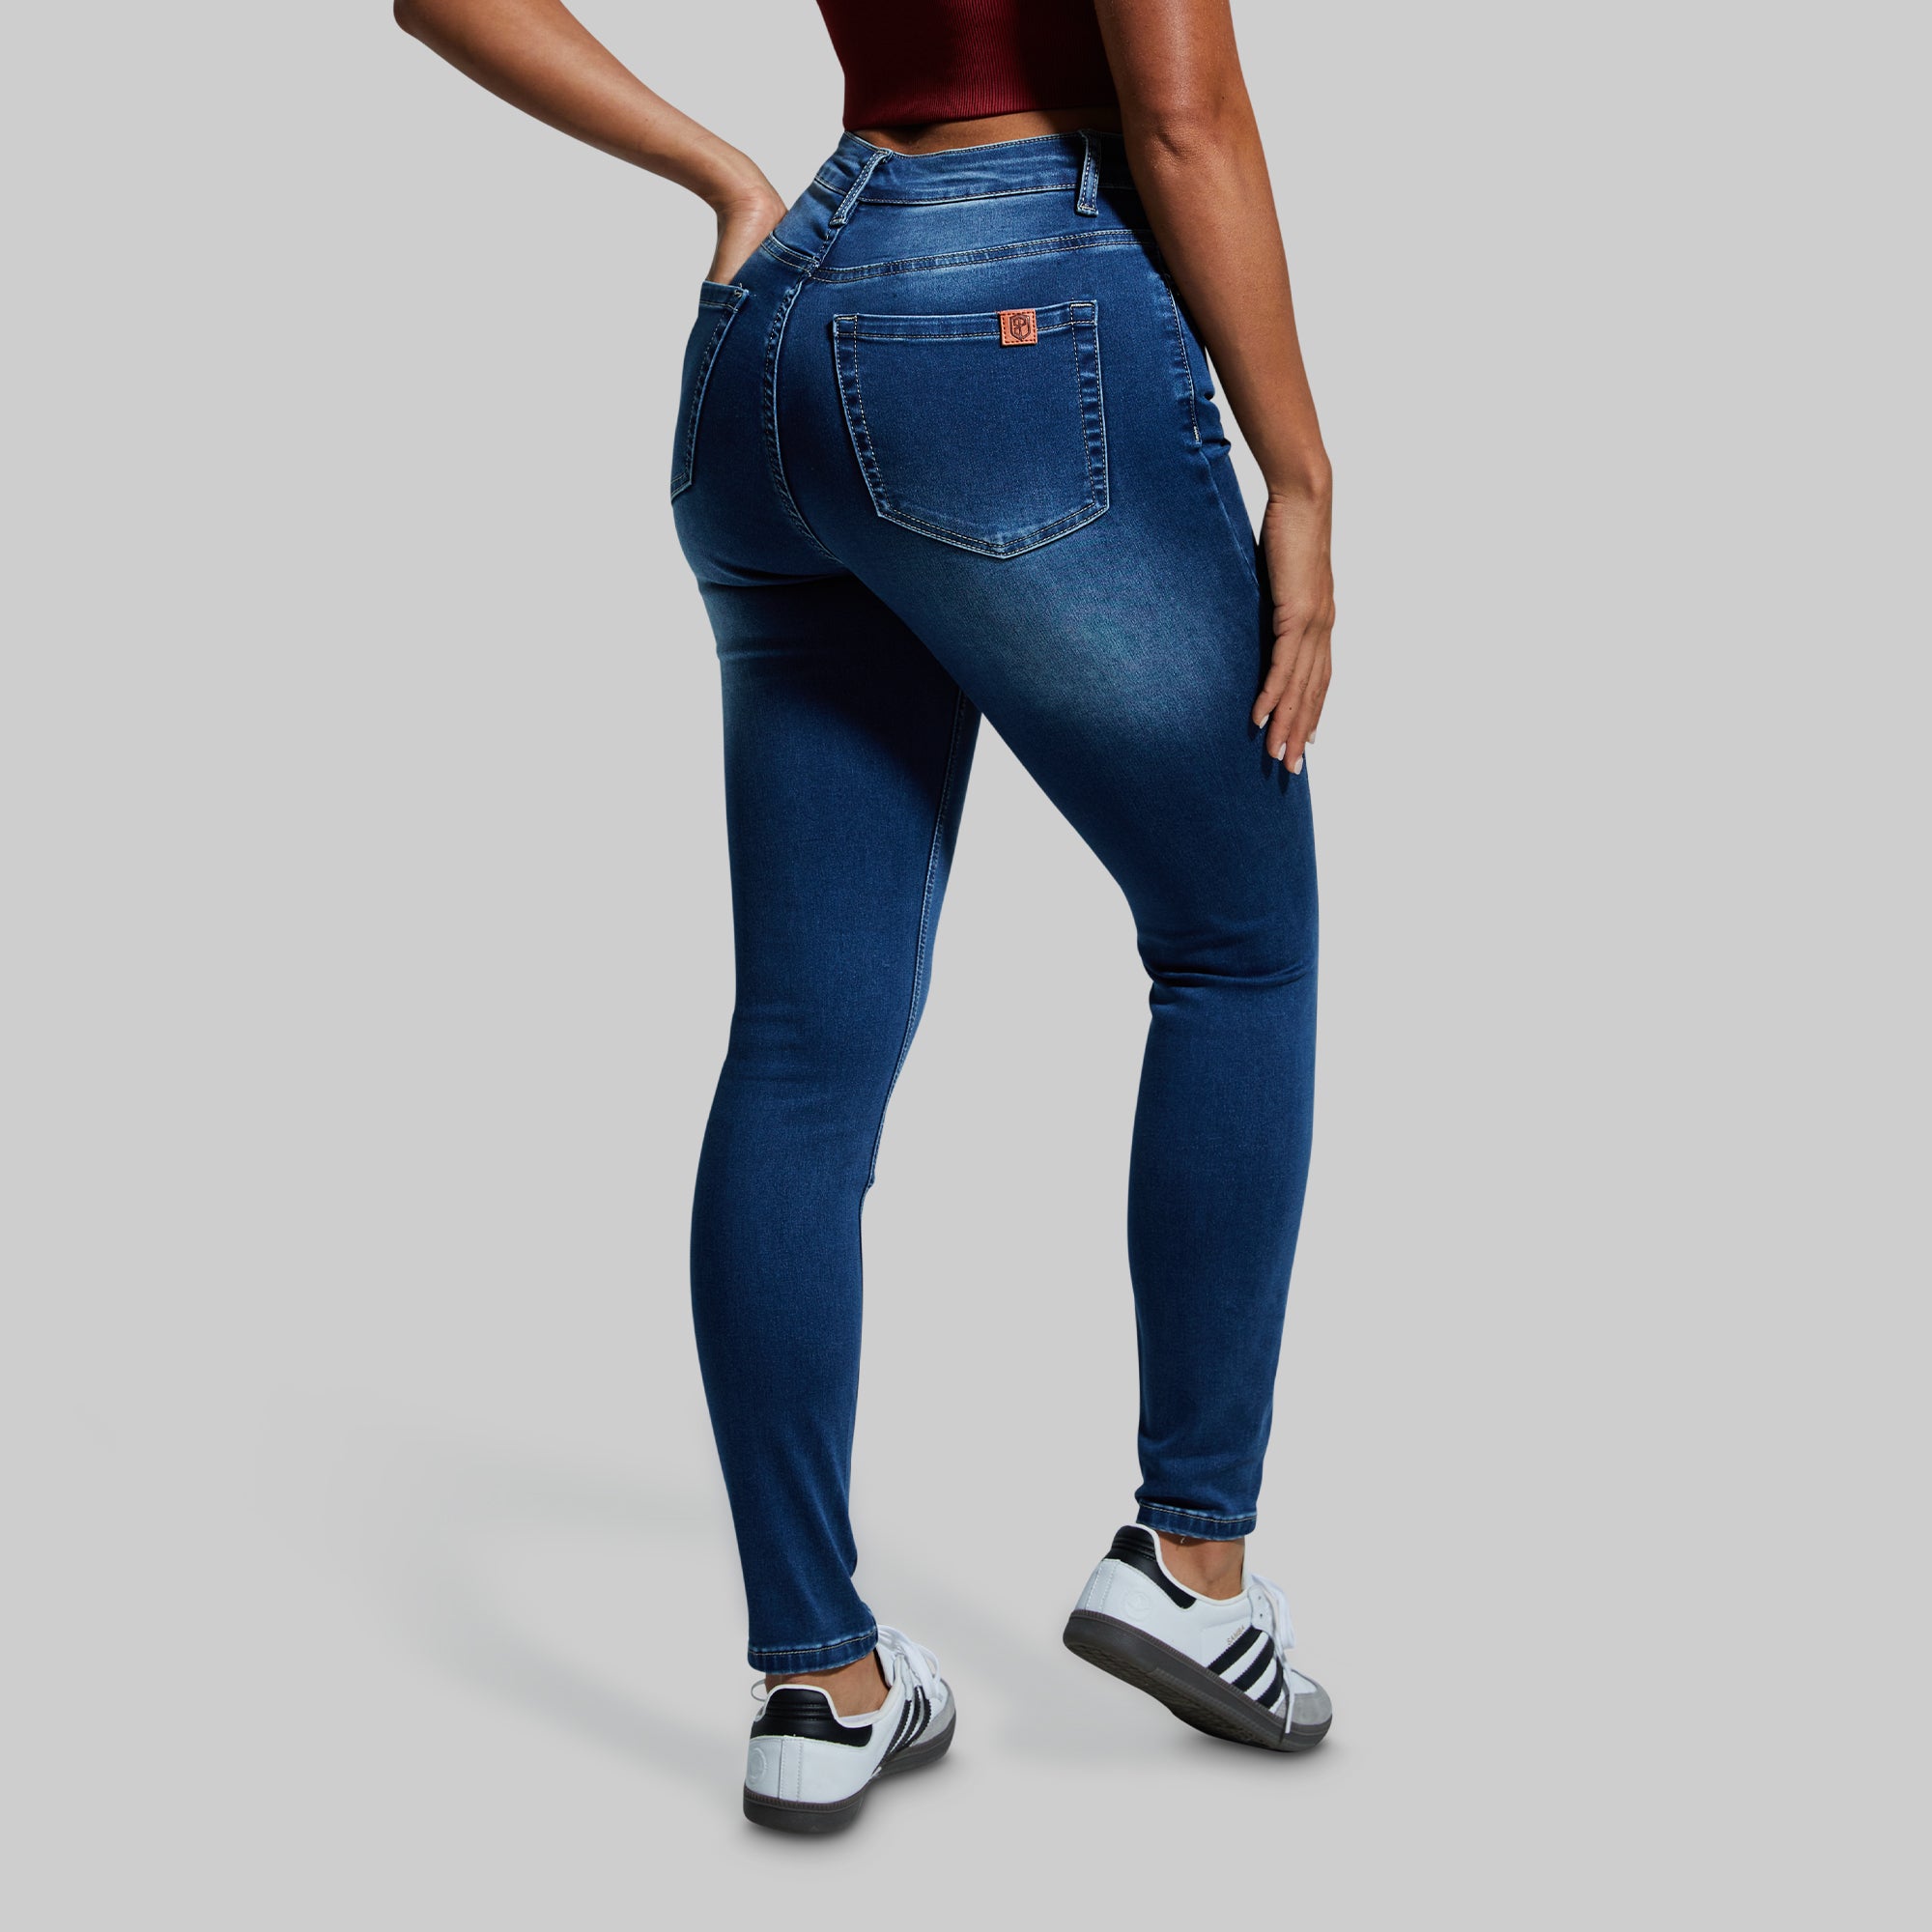 Women's Dark Wash Skinny Jeans  Stretchy Denim Jeans – Born Primitive